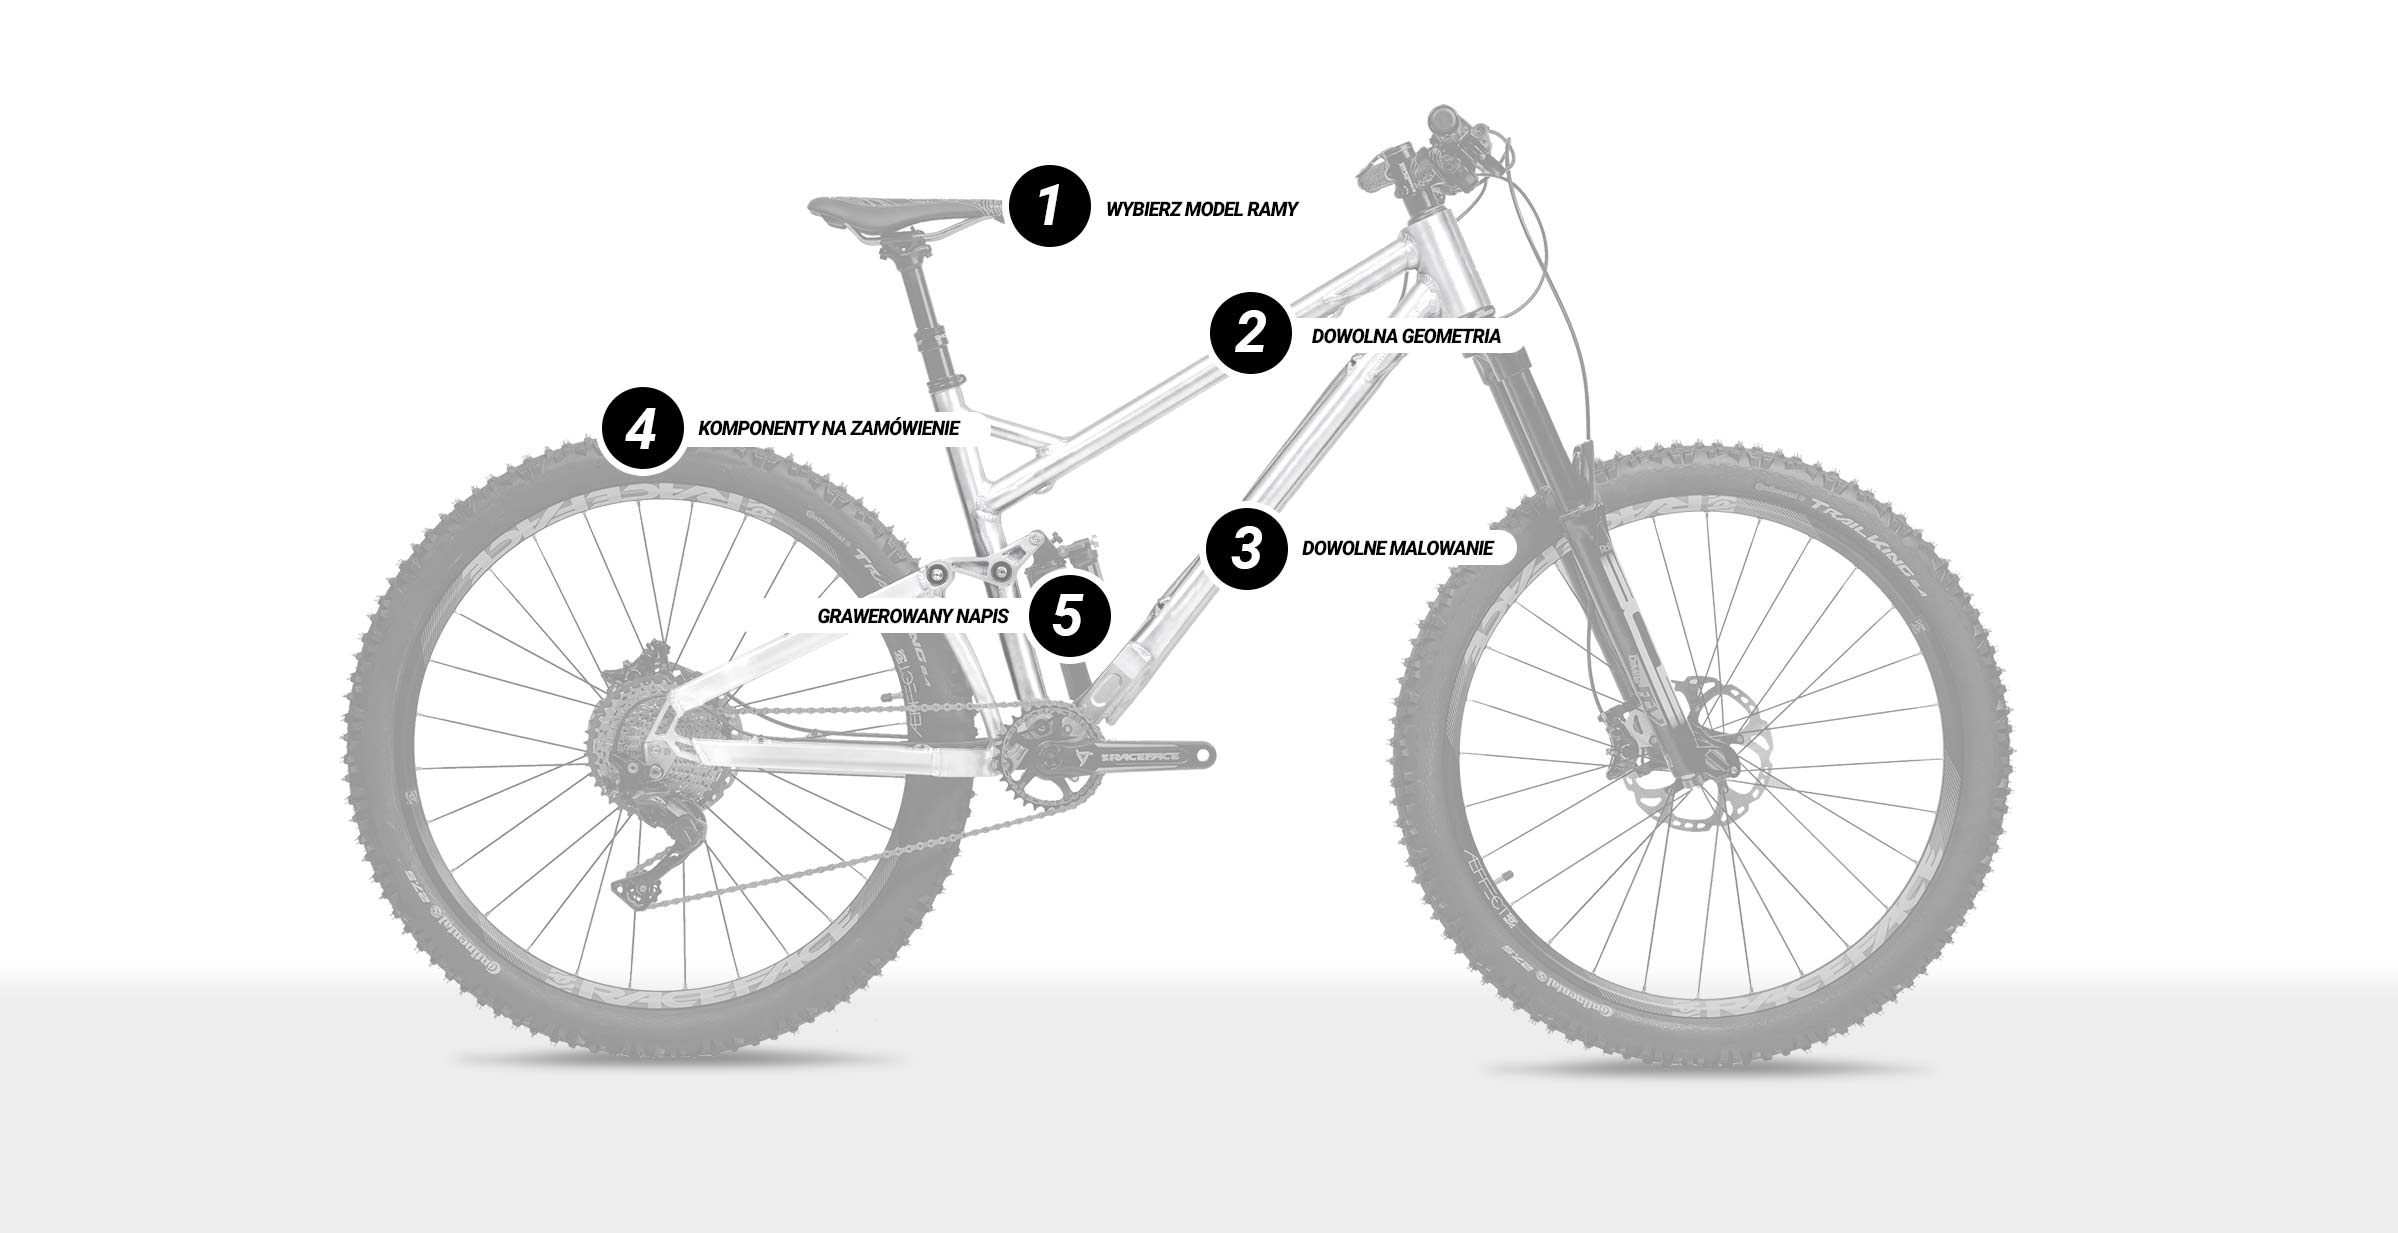 Custom bike - choose your details